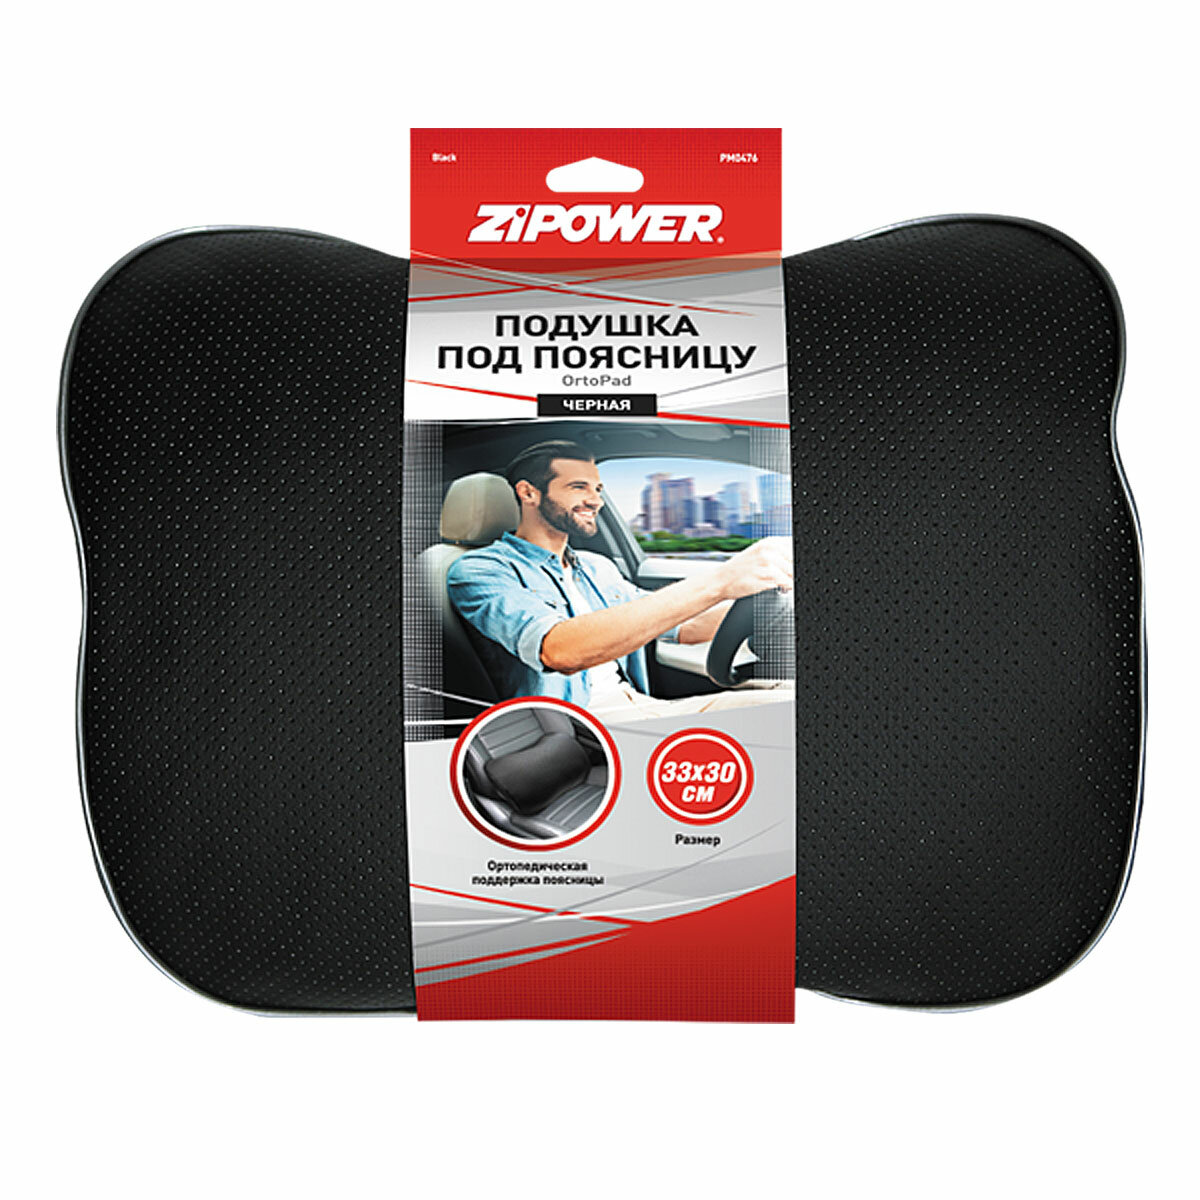 Автомобильная подушка на спинку кресла ZiPOWER OrtoPad